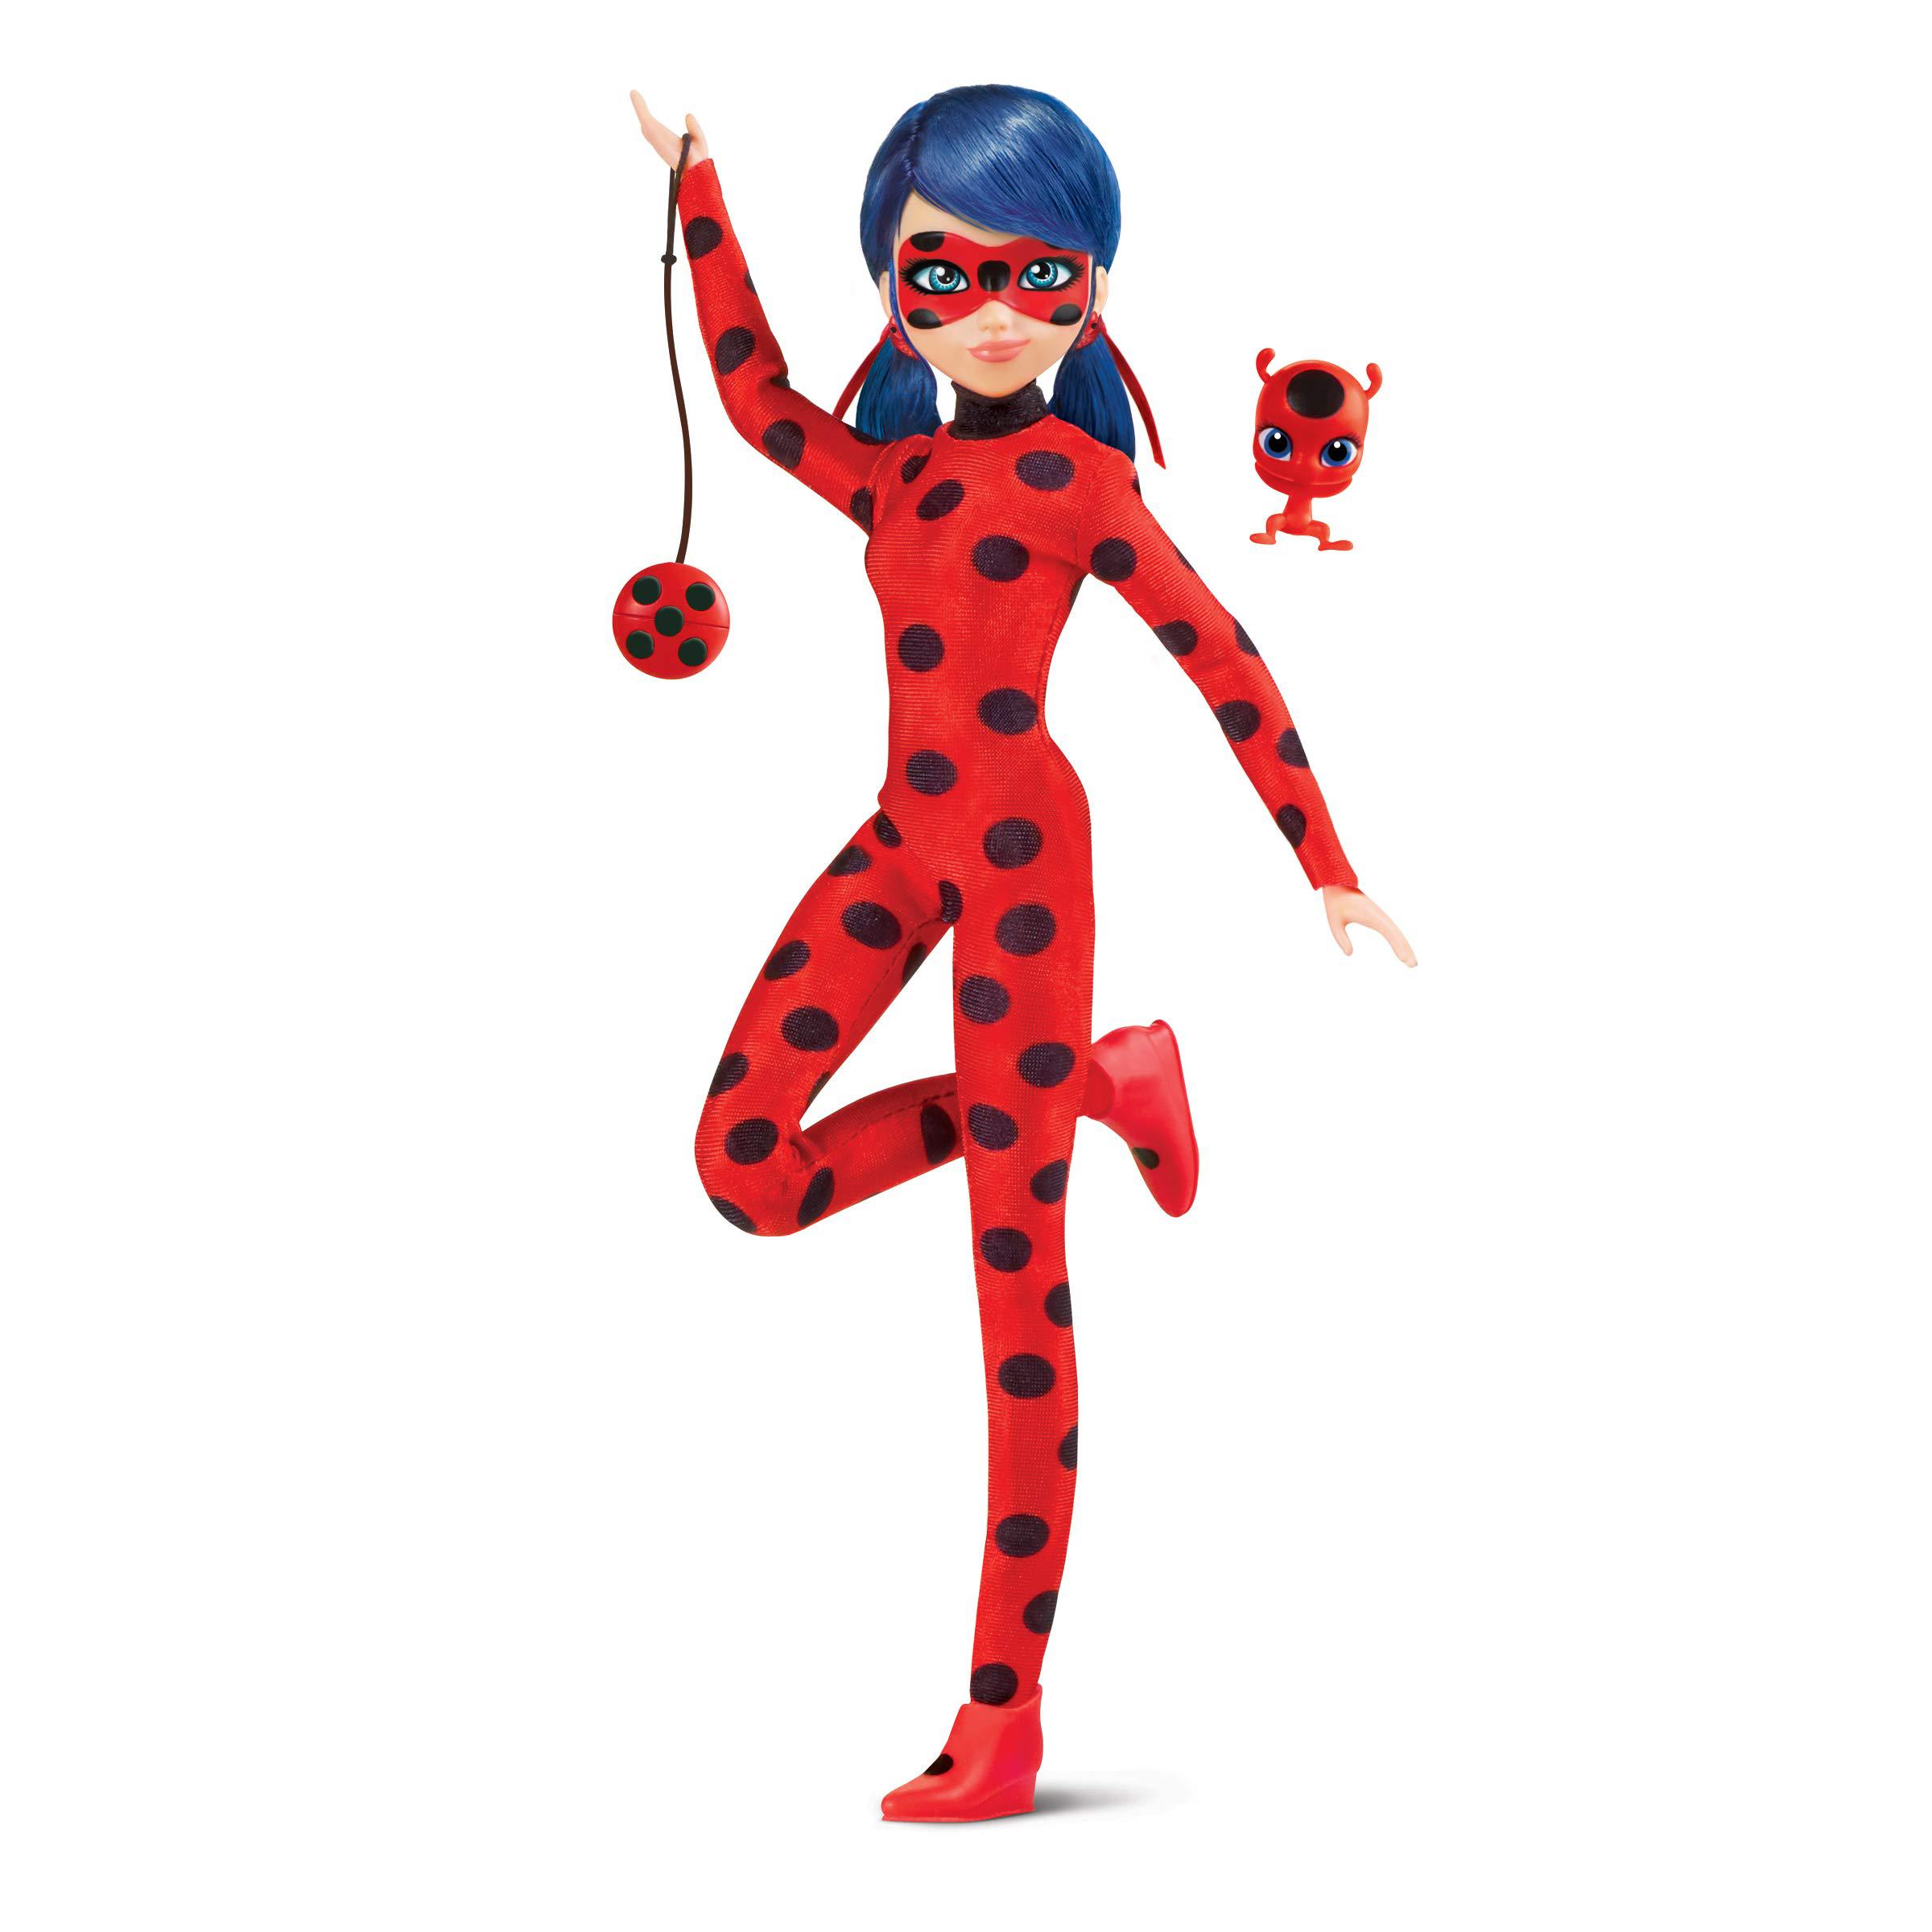 Bandai Toys bandai miraculous: tales of ladybug & cat noir - ladybug 26cm fashion doll with accessories